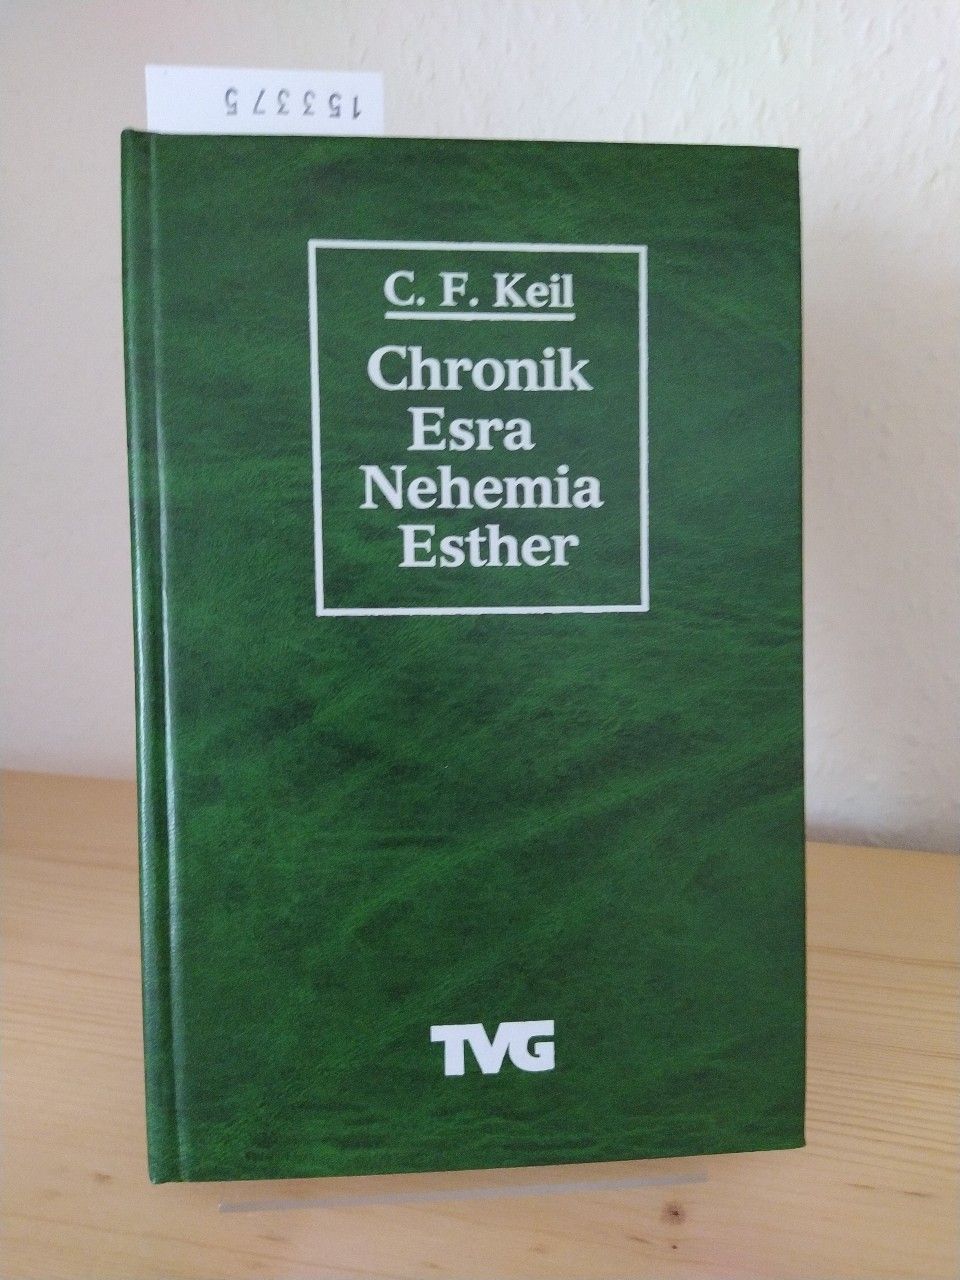 Chronik, Esra, Nehemia und Esther. [Von Carl Friedrich Keil]. - Keil, Carl Friedrich